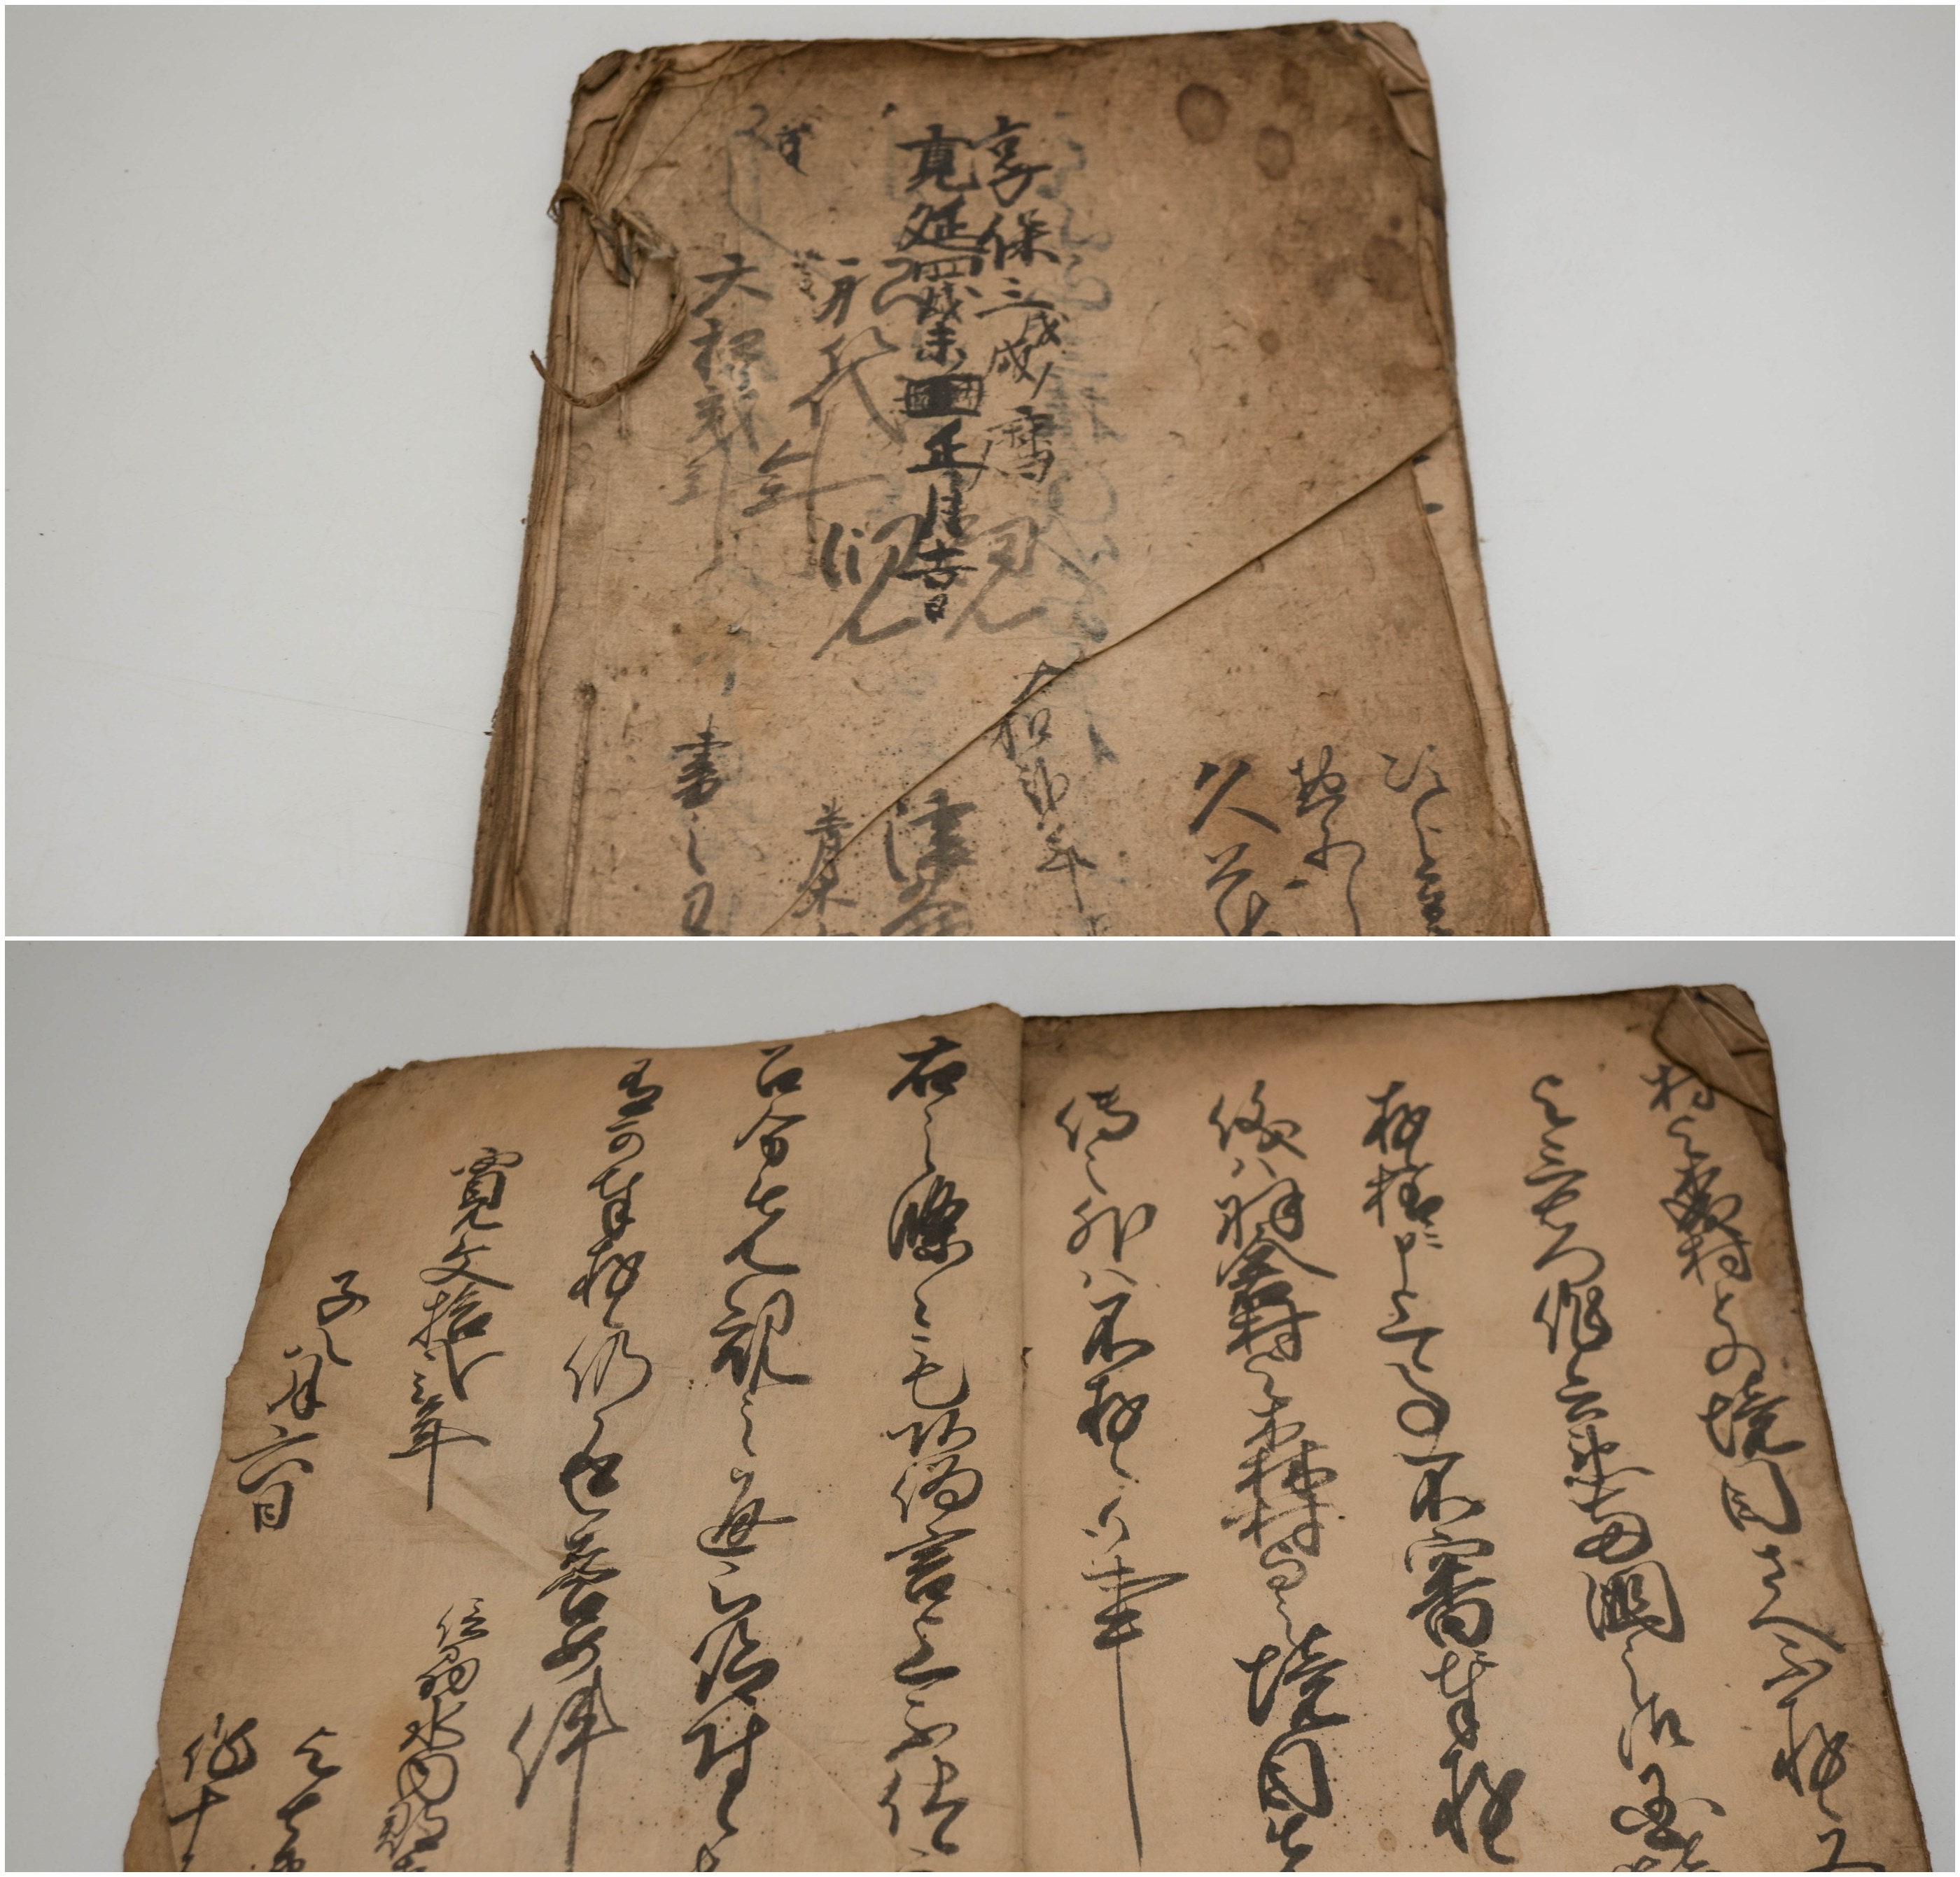 Japan floral sketchbook manuscript watercolor 1800 Washi paper